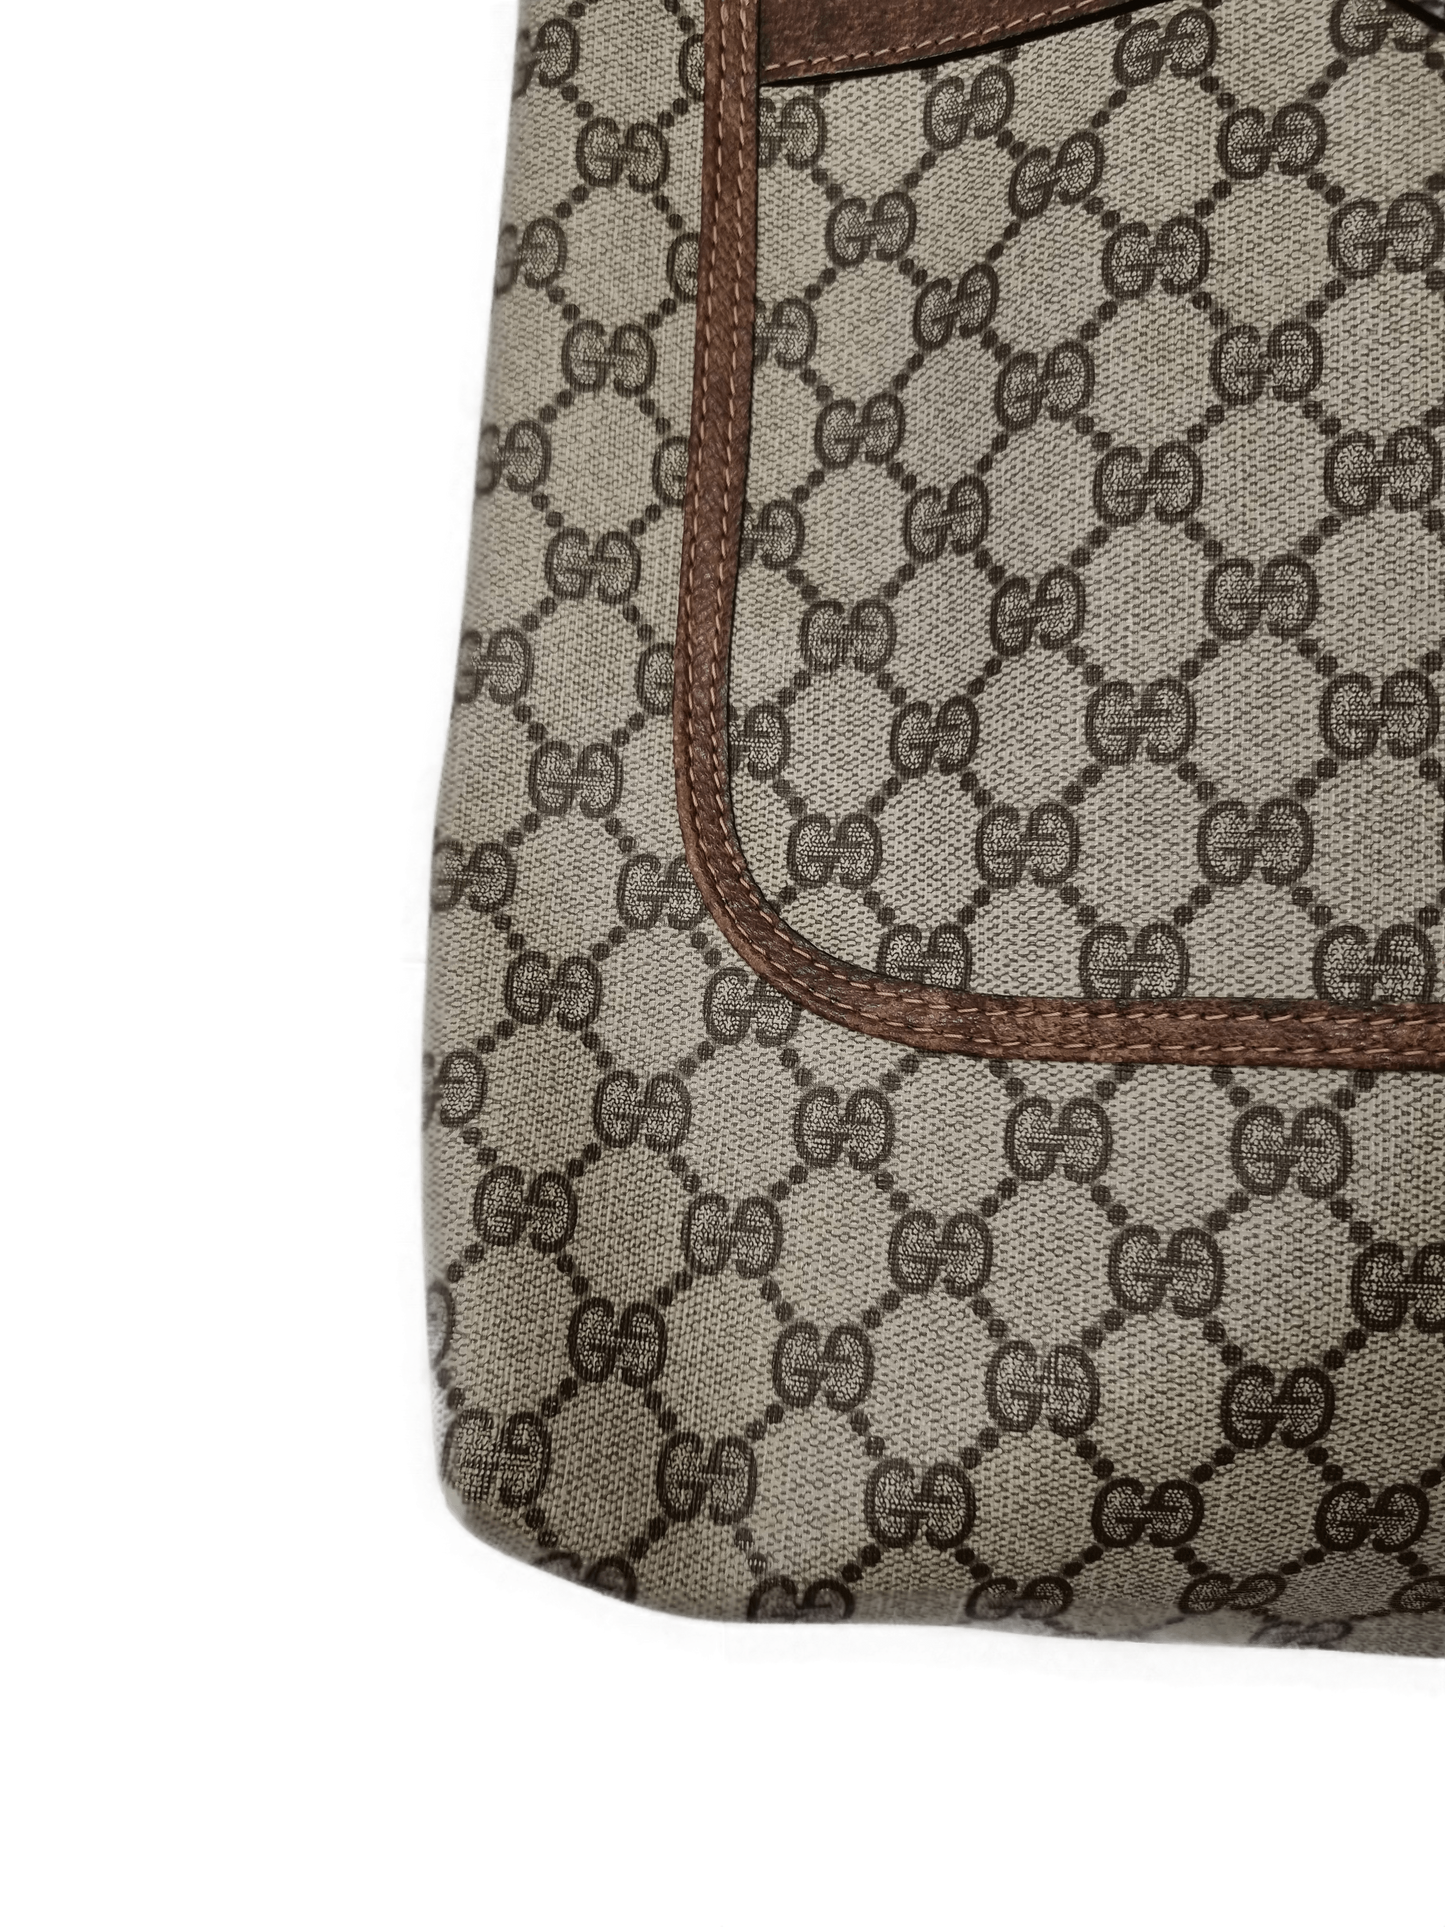 Gucci Accessory Beige Tote Bag